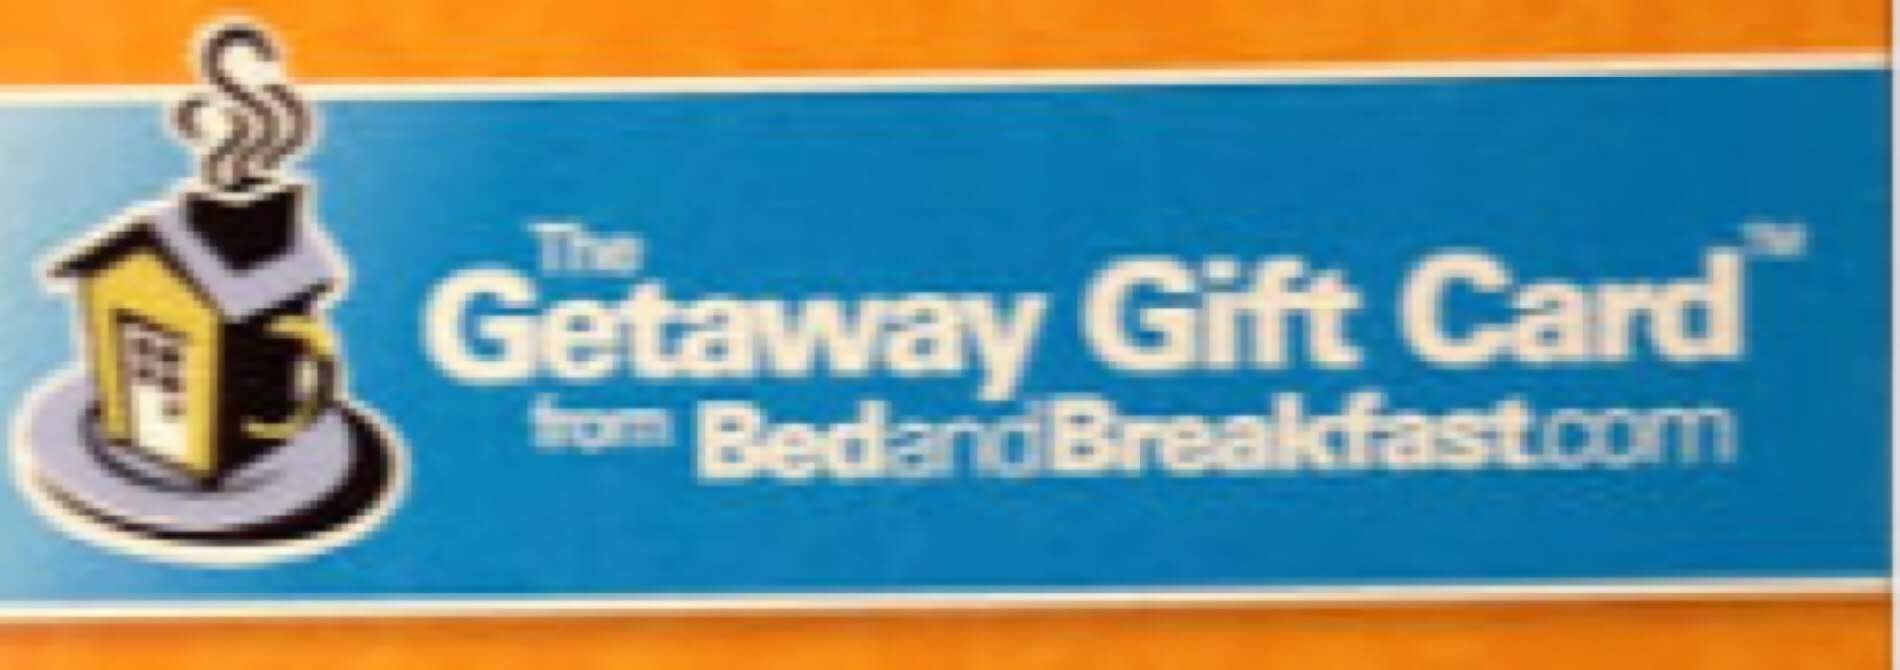 the getaway gift card